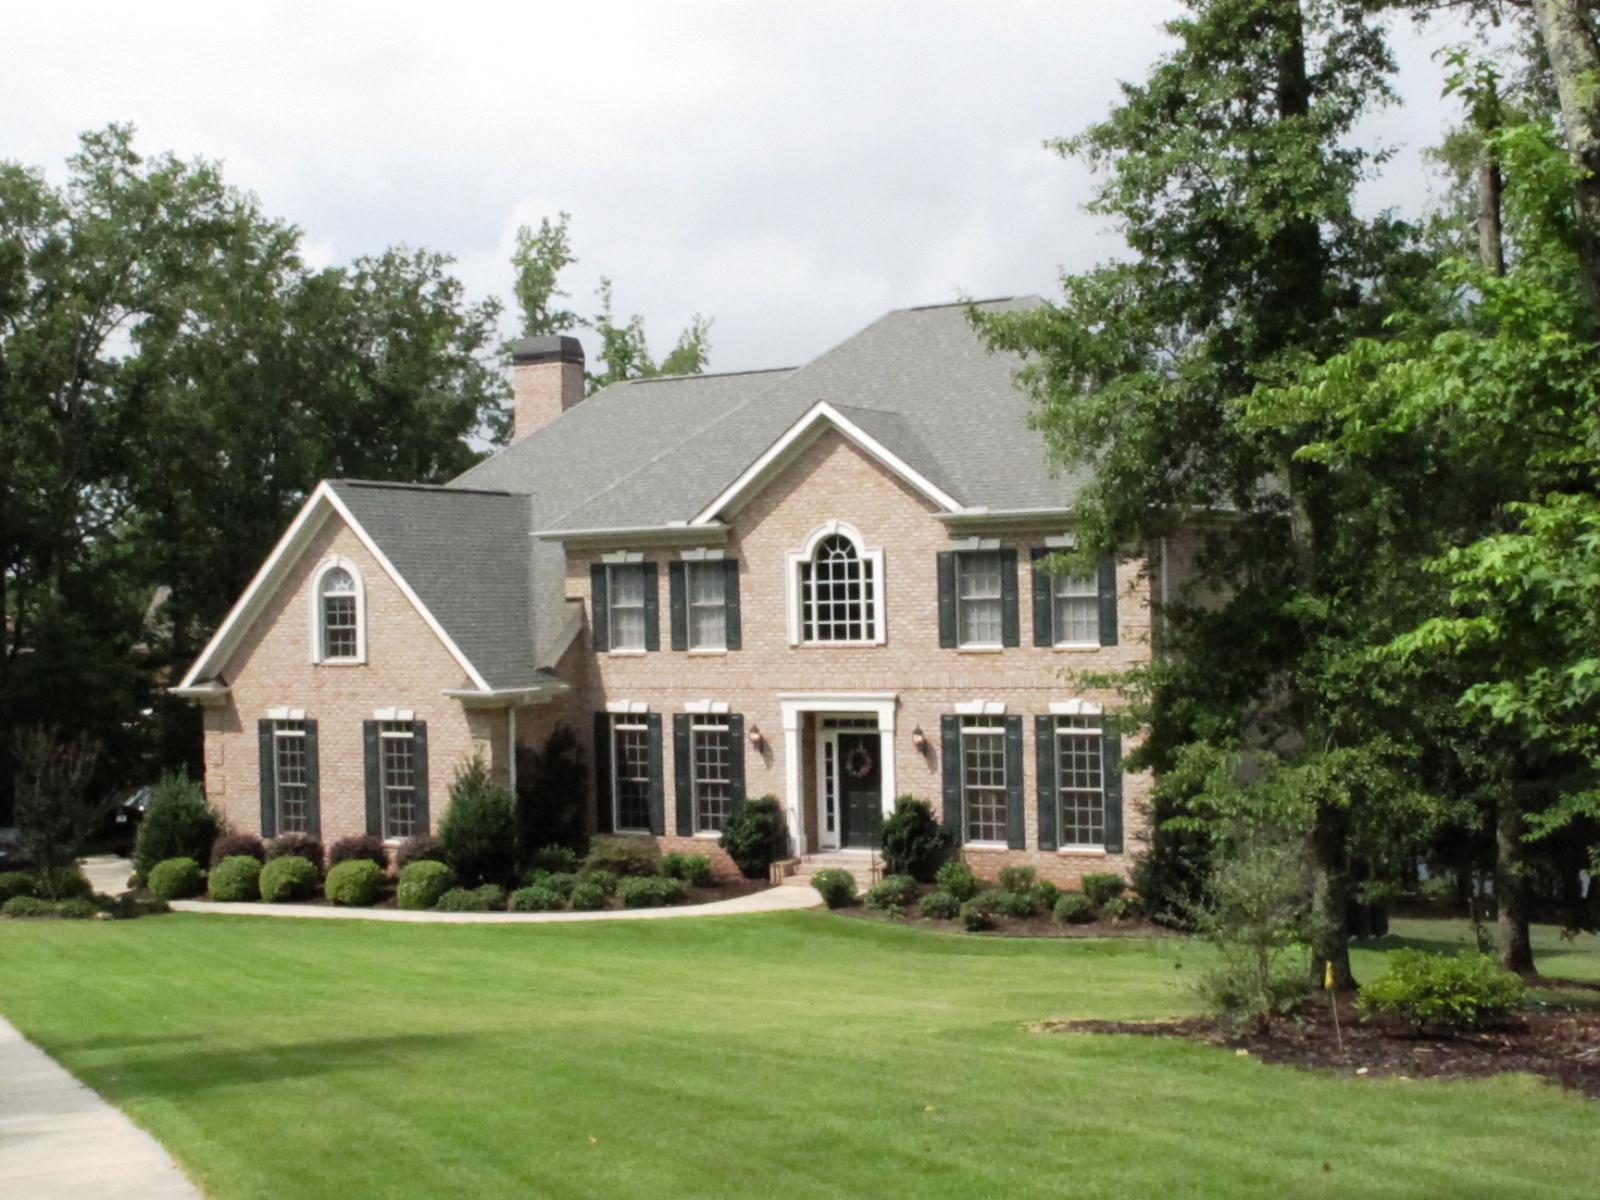 The Renzis' home in Greenville, South Carolina.